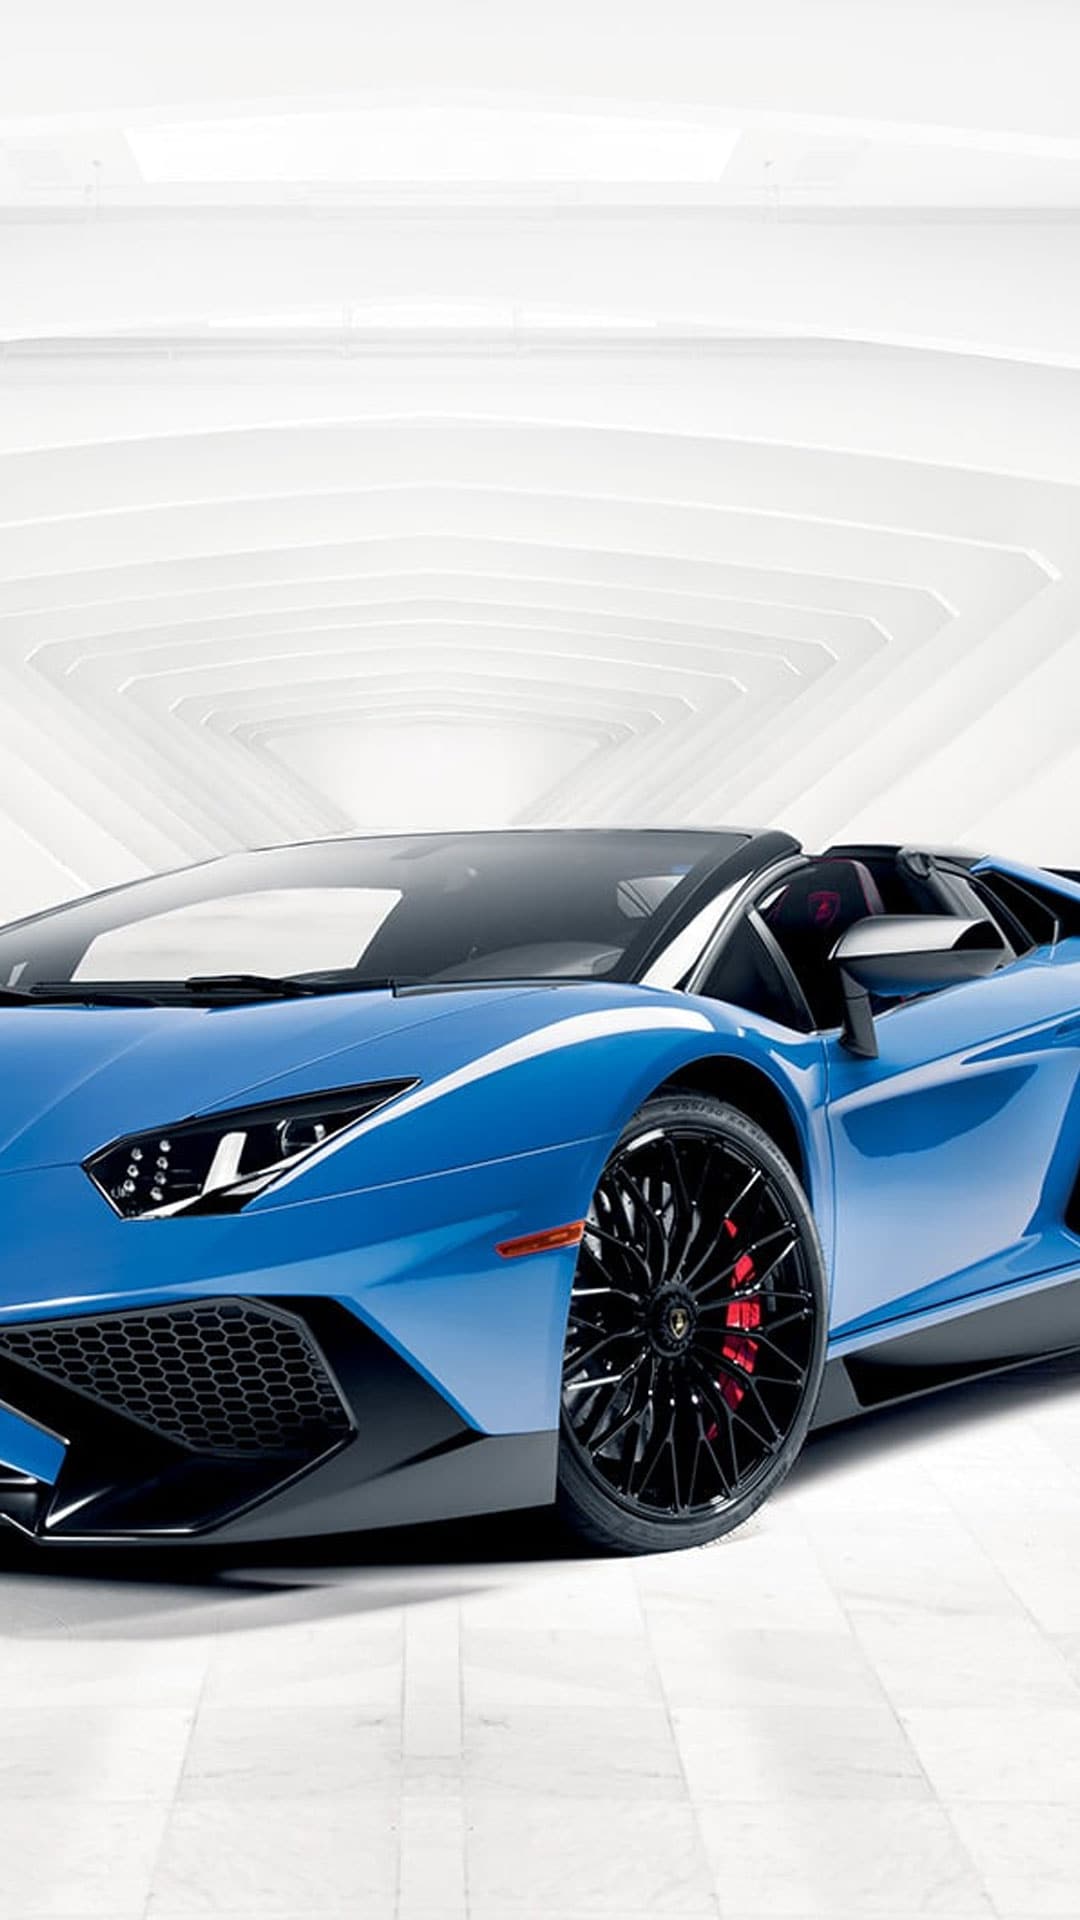 Lamborghini Aventador — легкость грубой силы